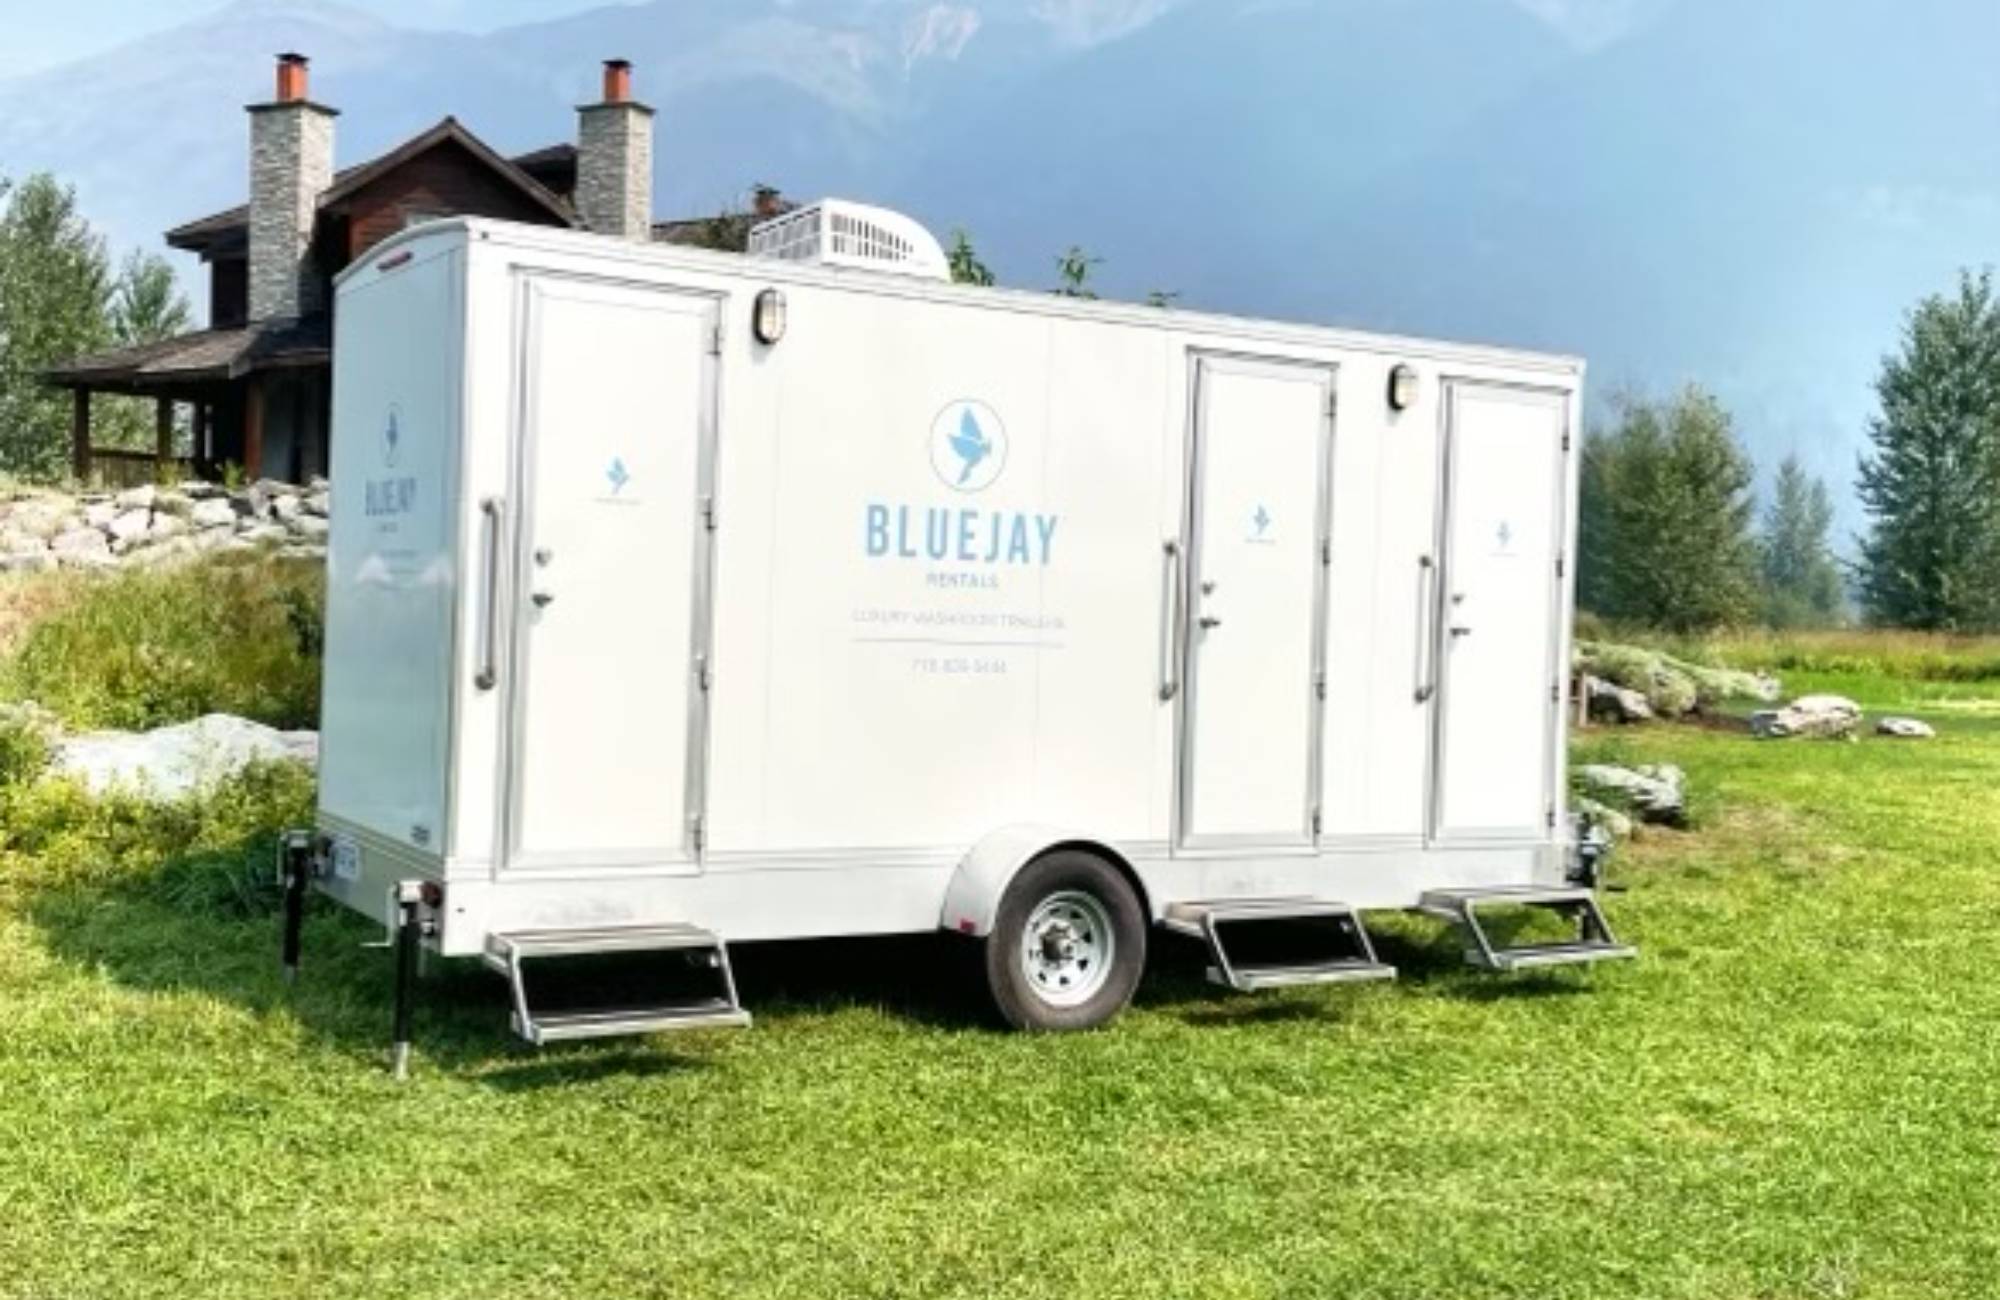 washroom trailer for wedding outside grass